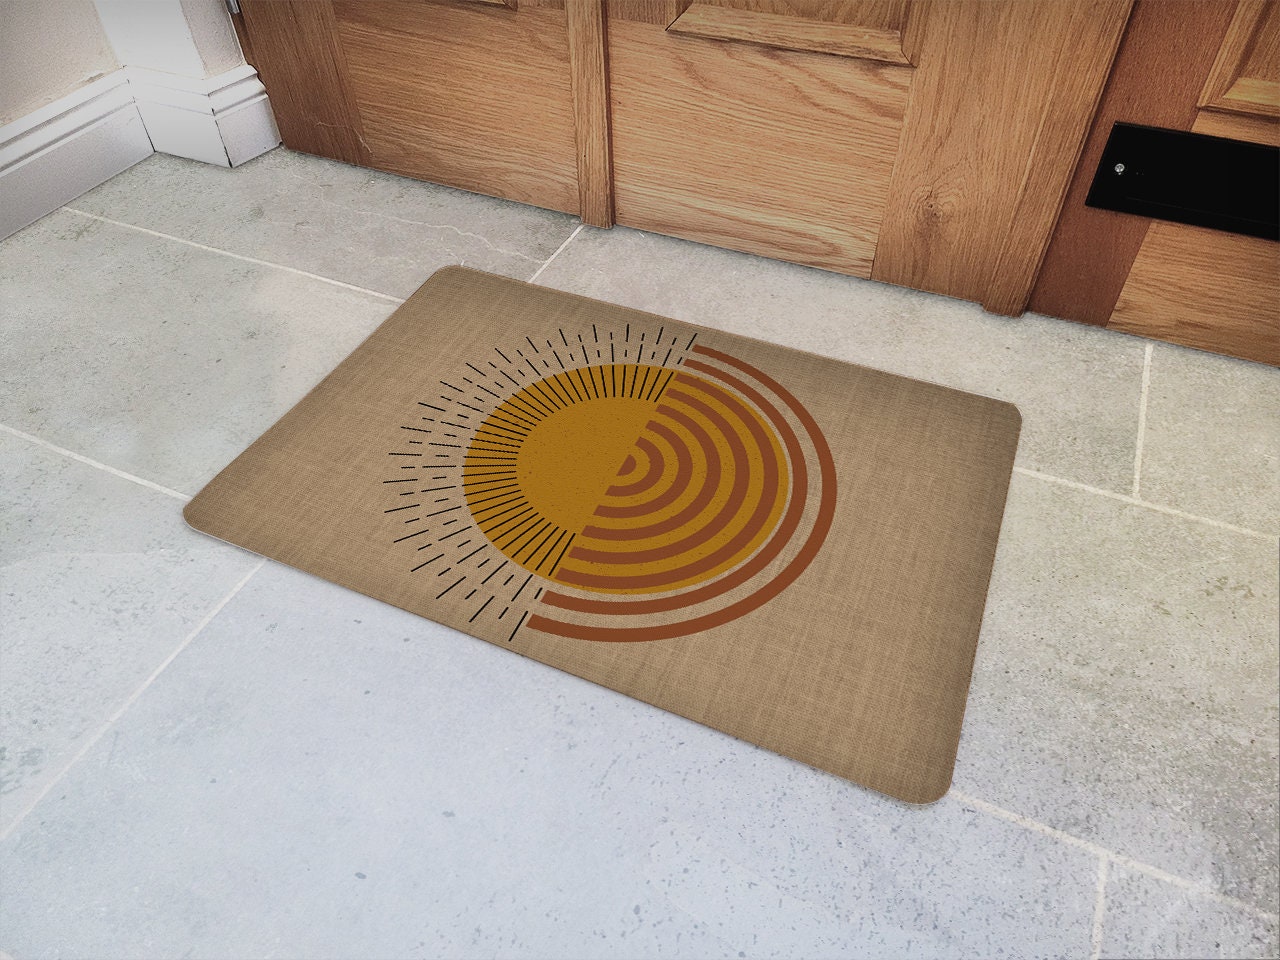 Interluxe Kokos-Fußmatte - Lineart Geo Art - dekorative Türmatte für